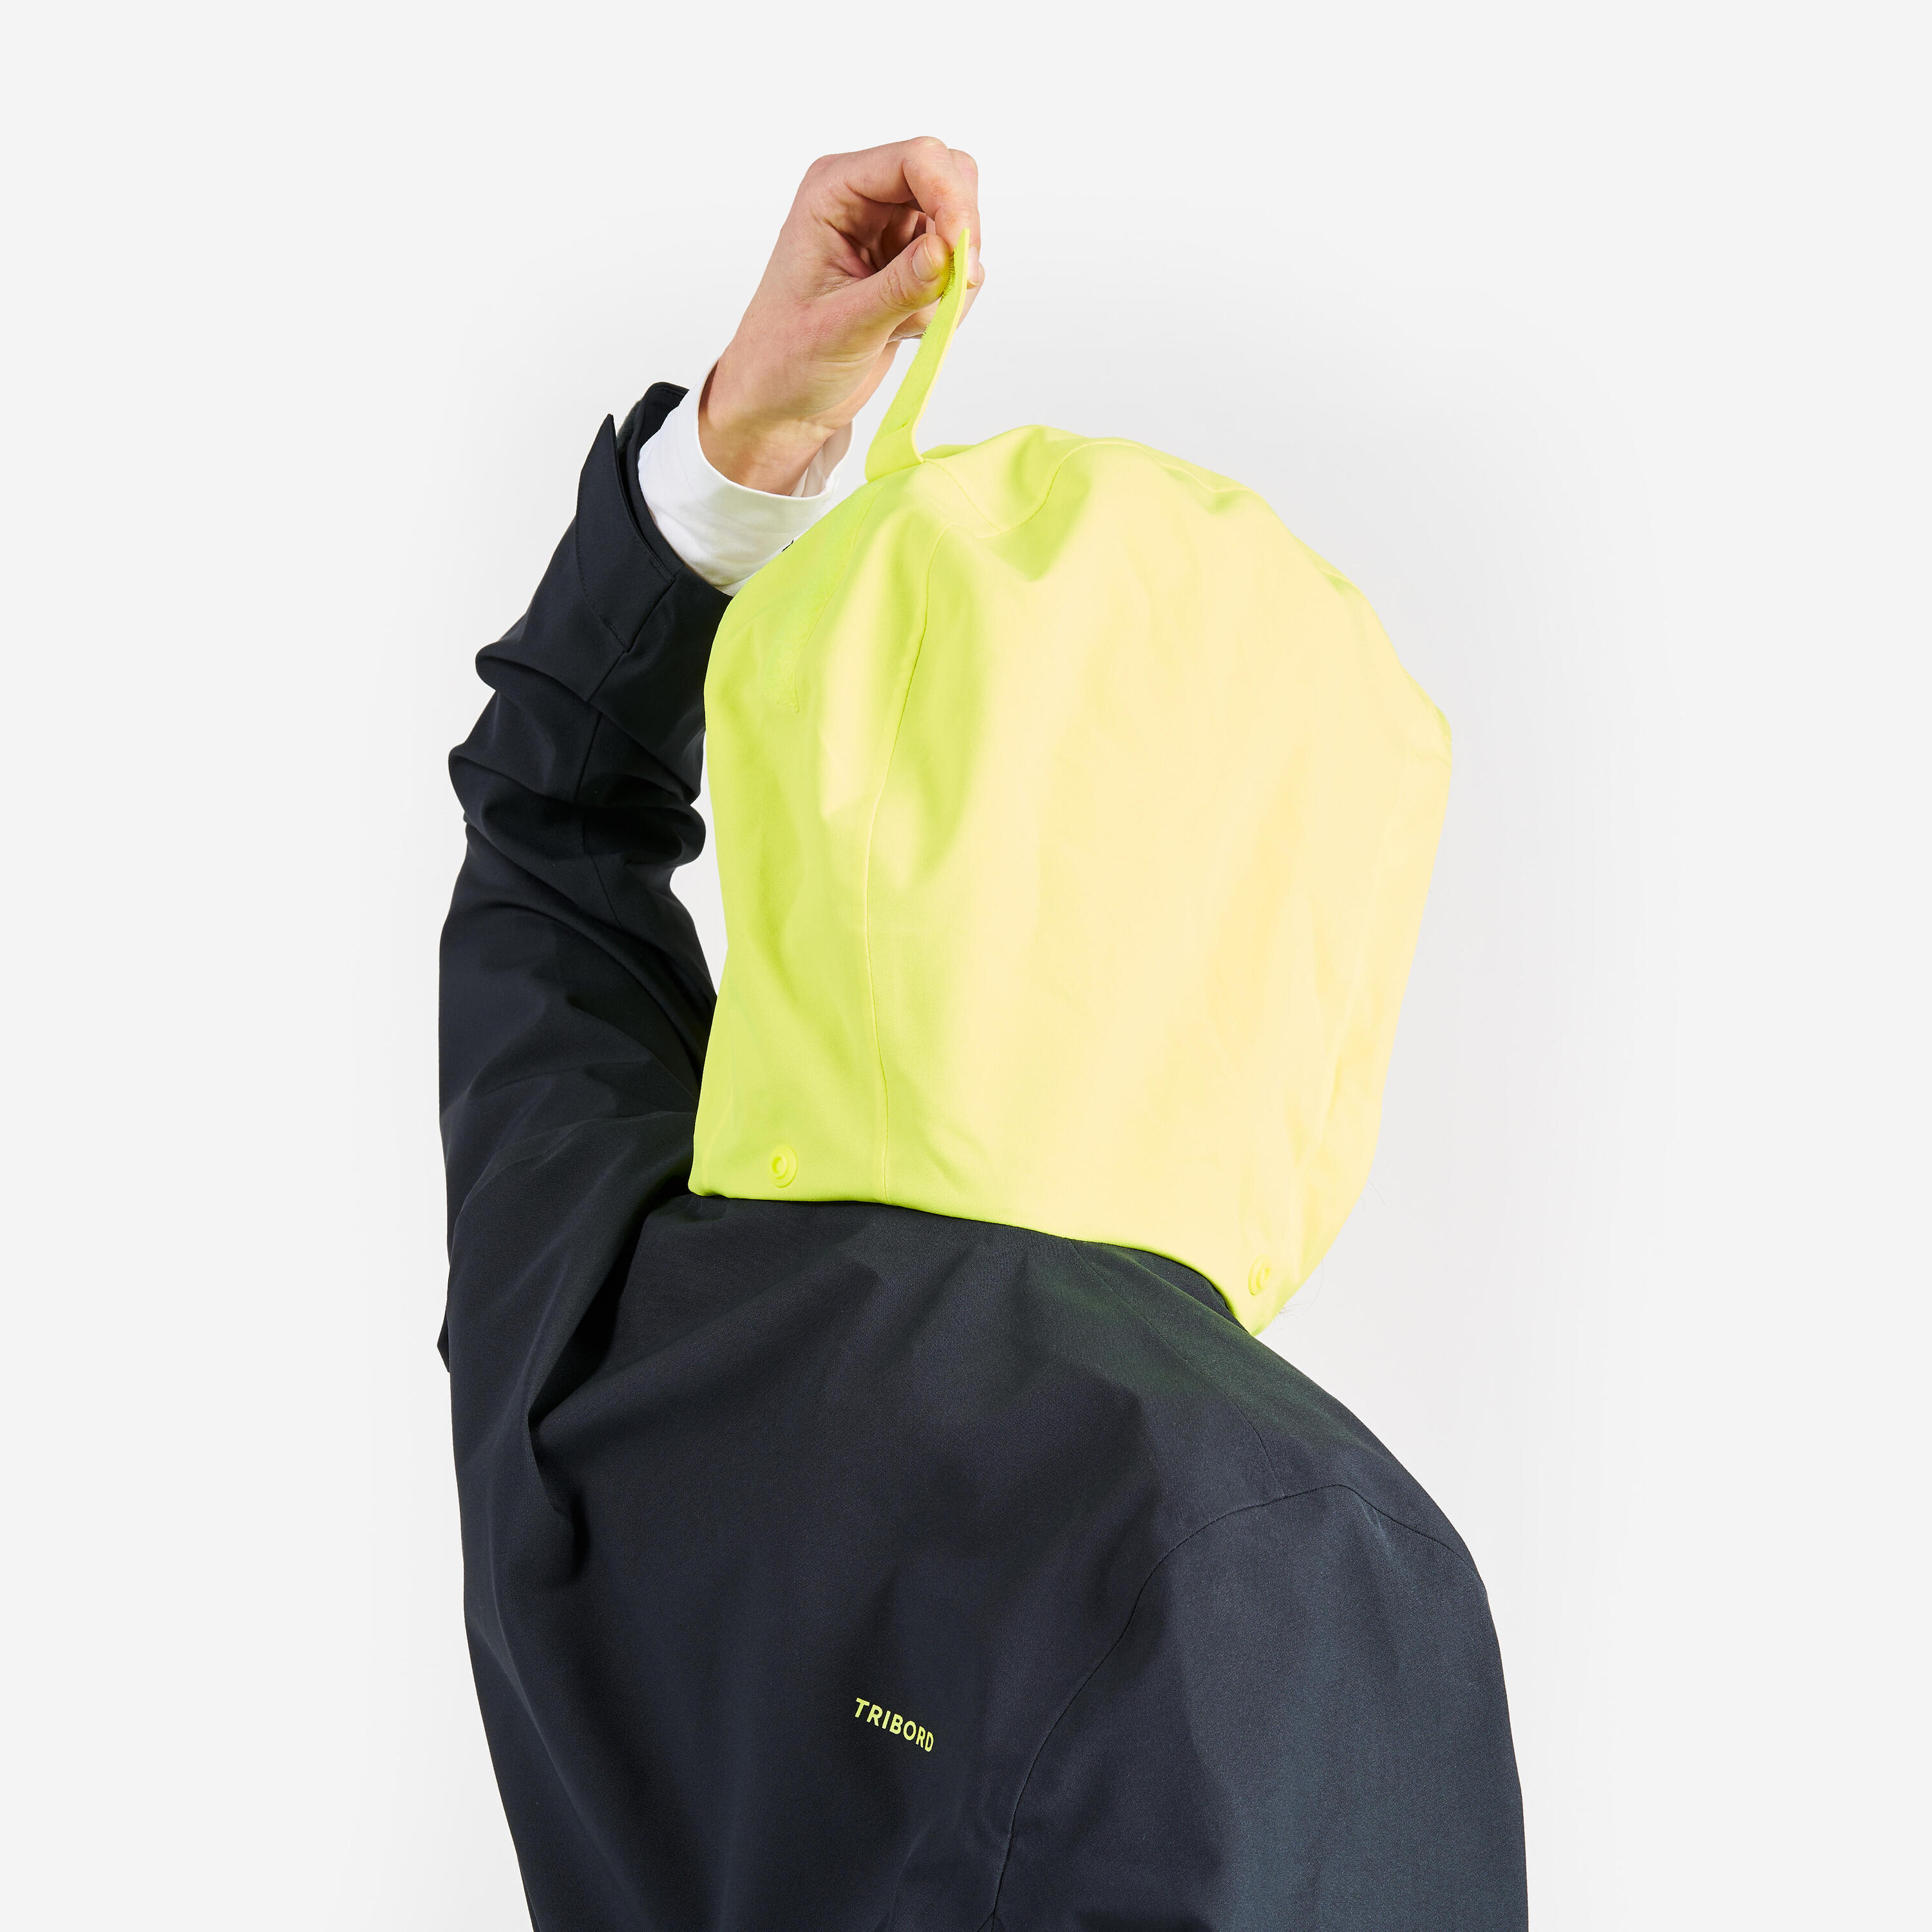 Women's sailing waterproof windproof jacket SAILING 300 - Dark grey Yellow hood 8/13